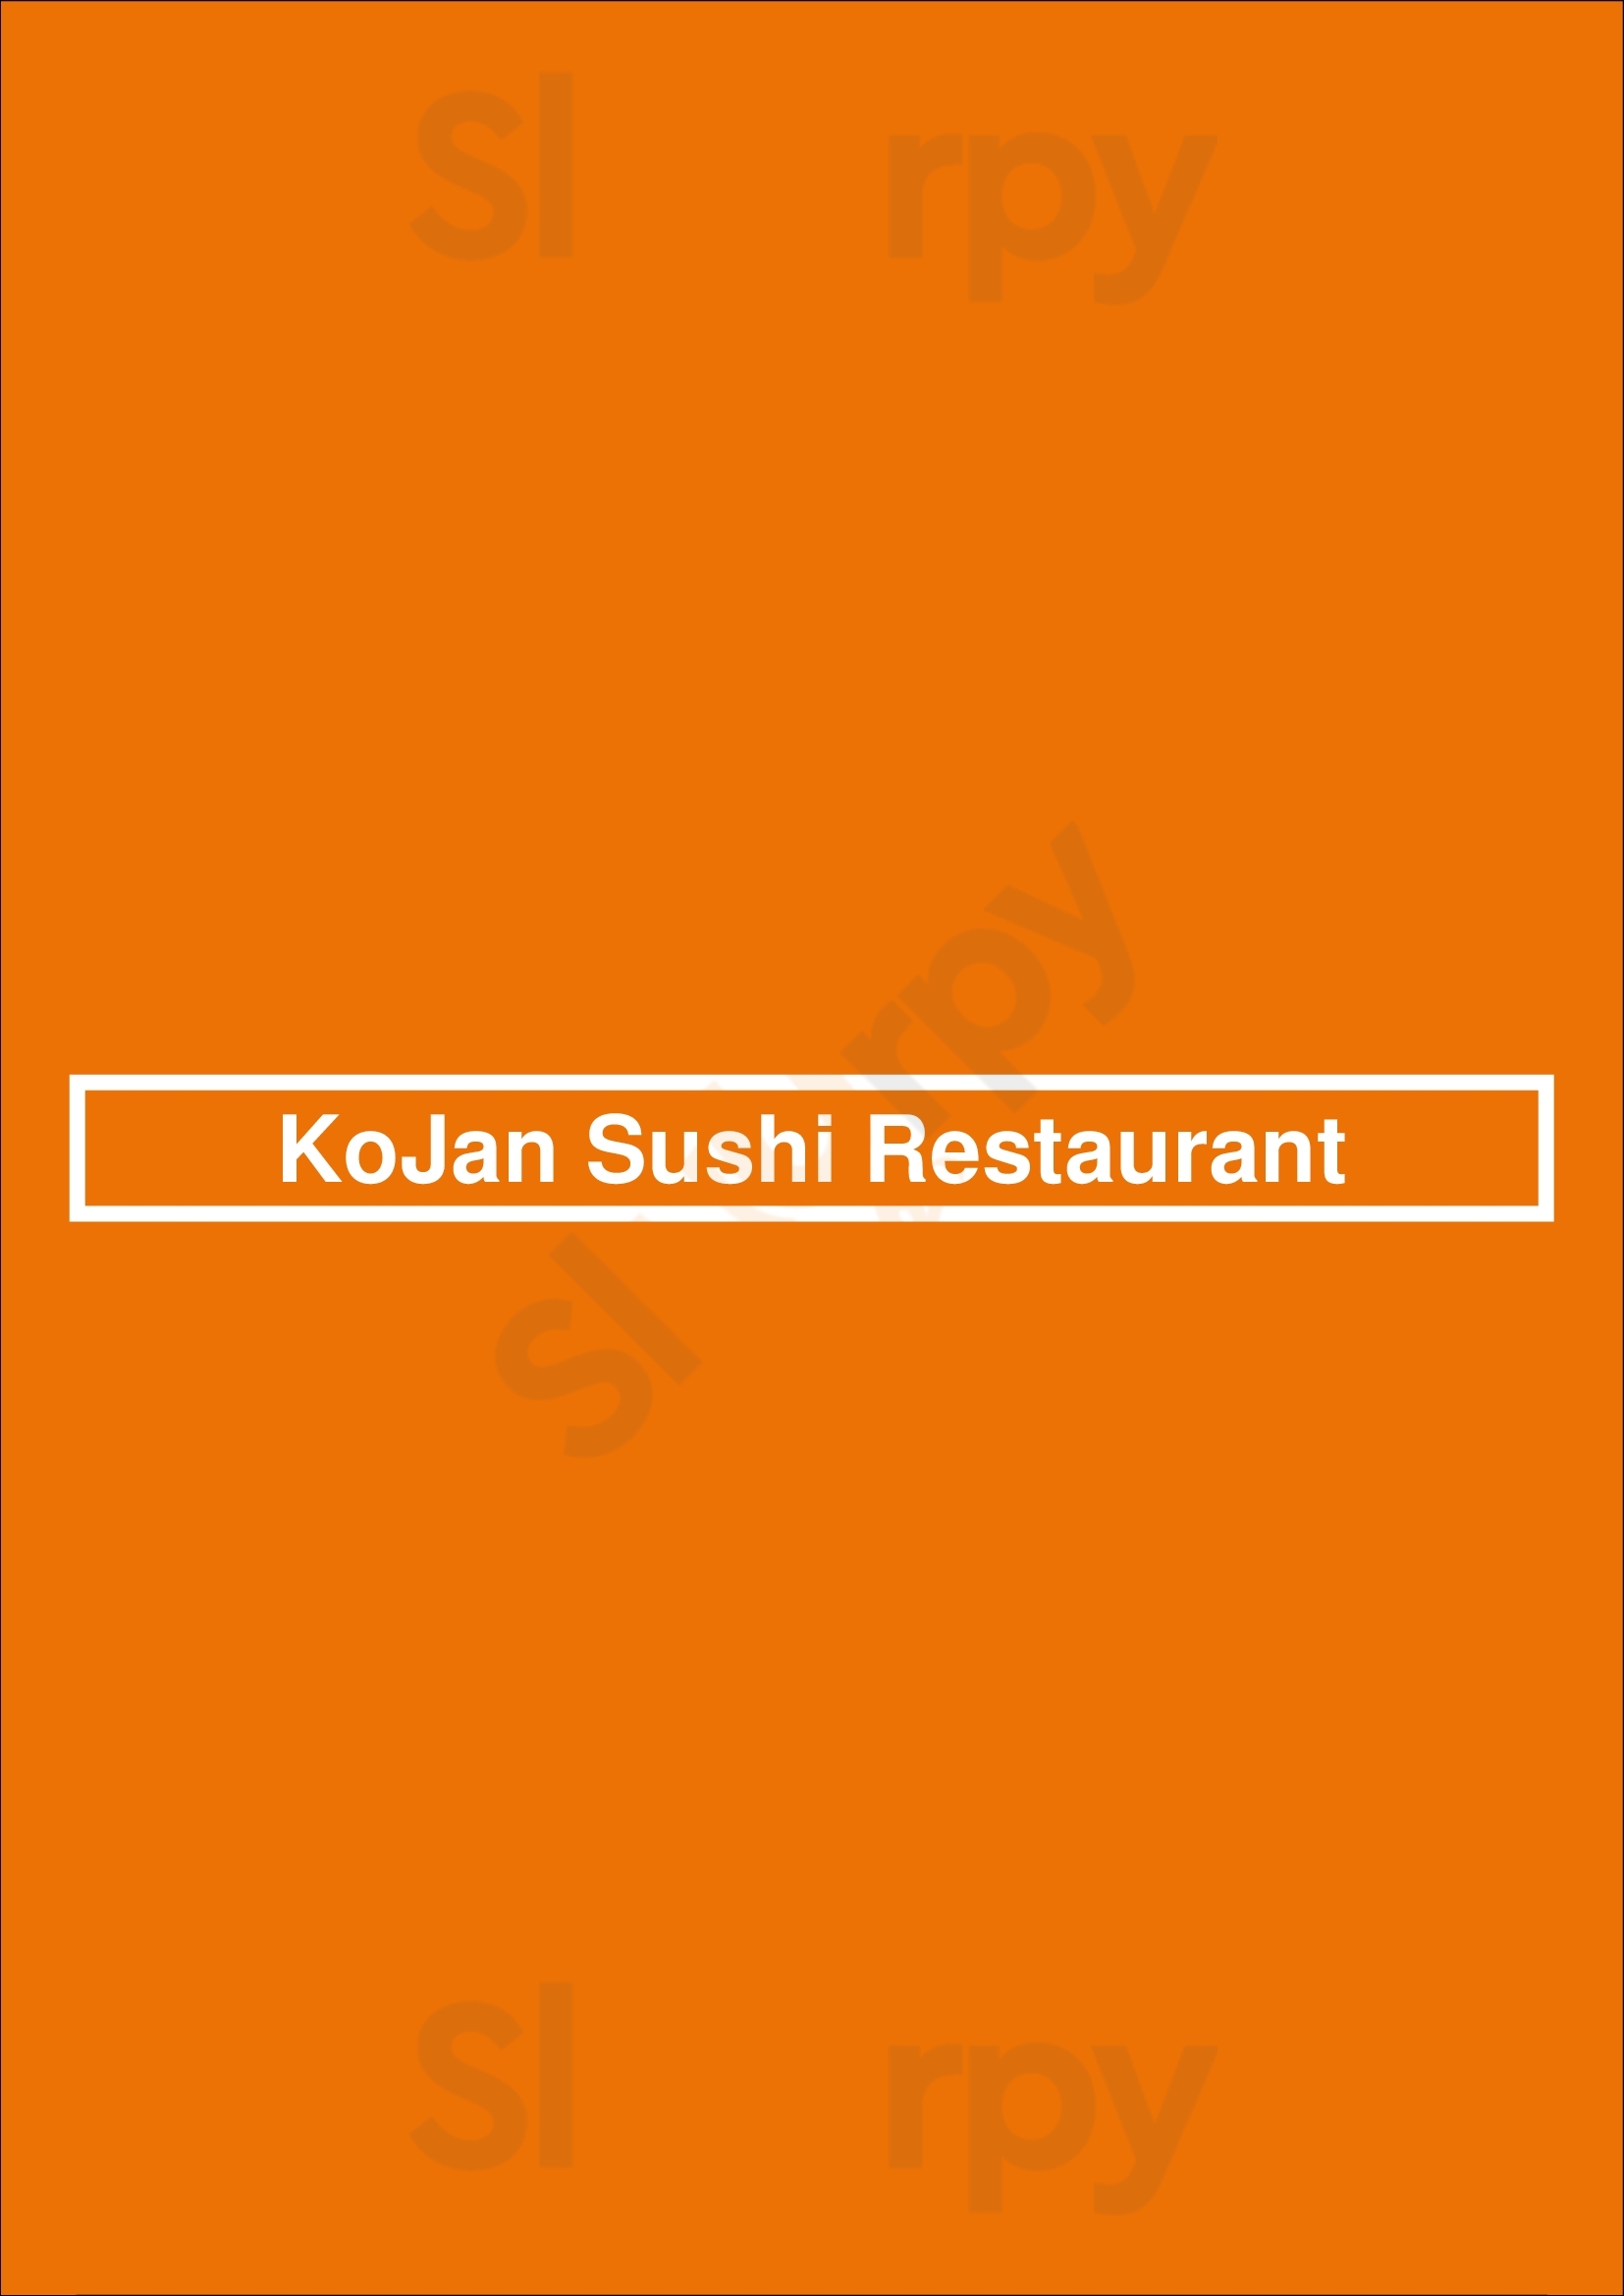 Kojan Sushi Restaurant Abbotsford Menu - 1